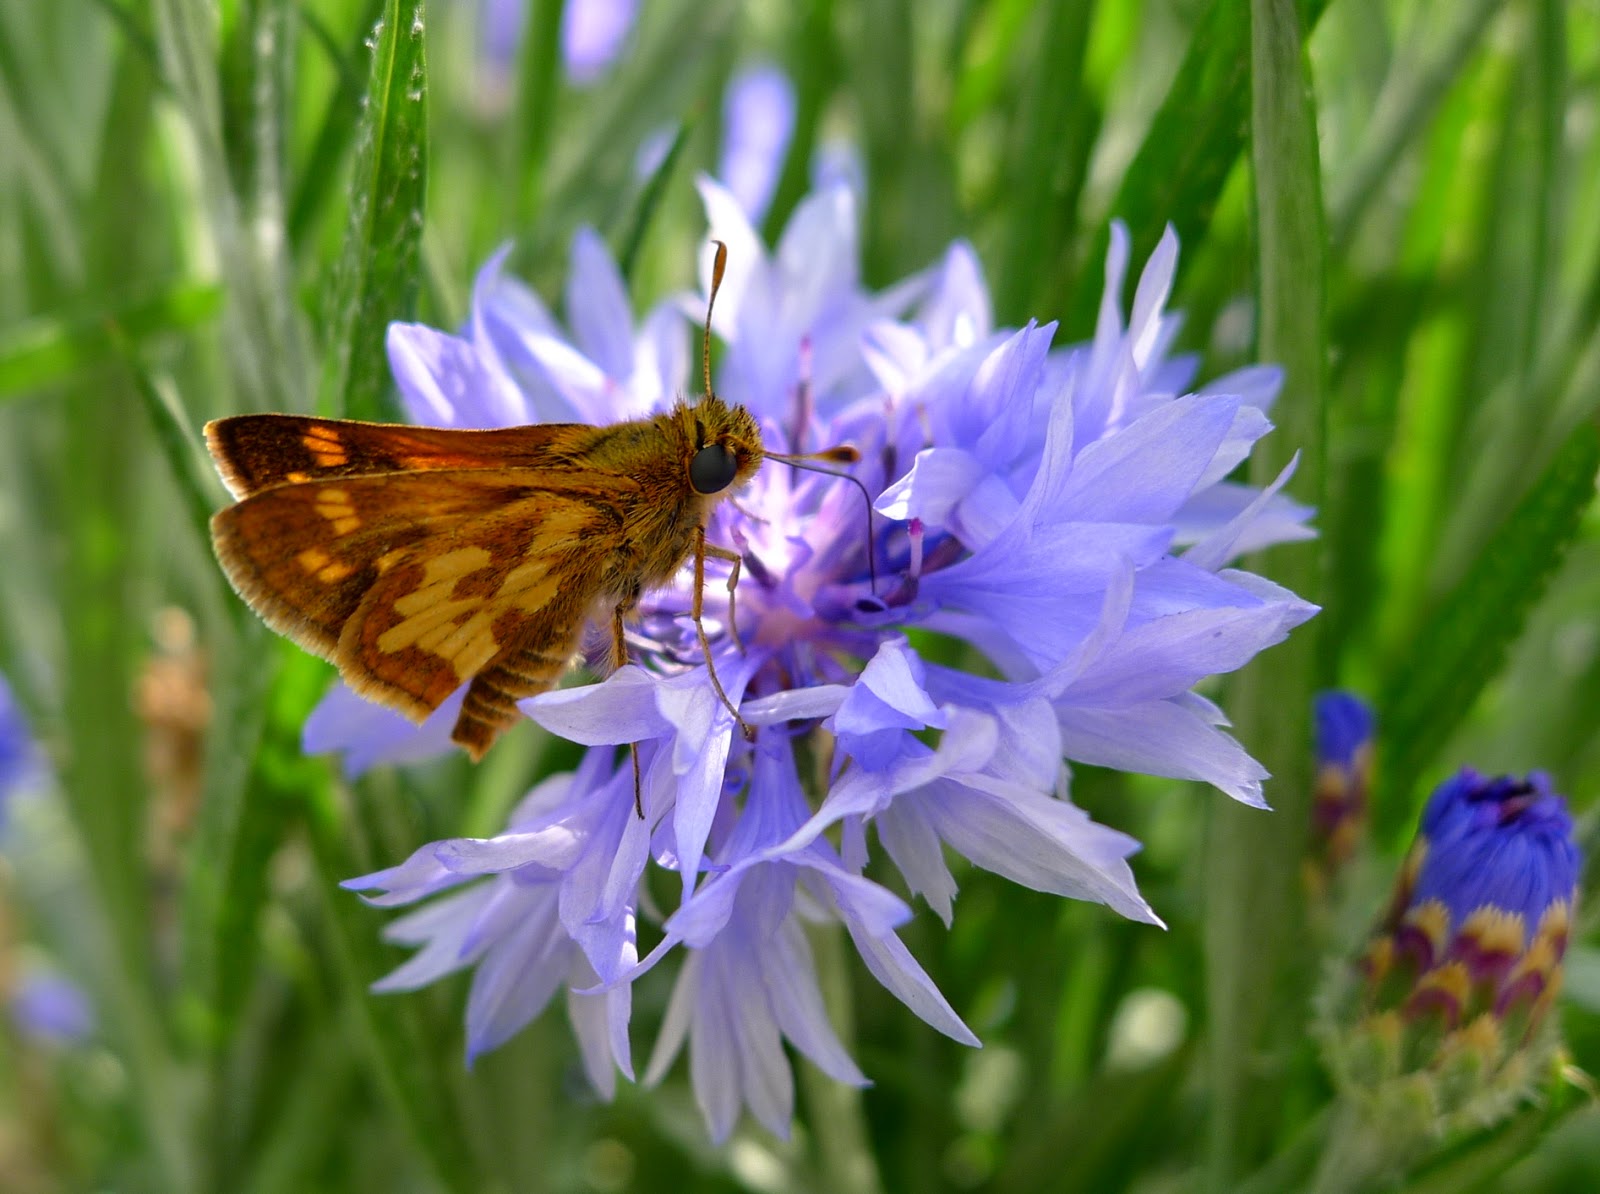 Pollinating butterfly, pollinators, urban farming